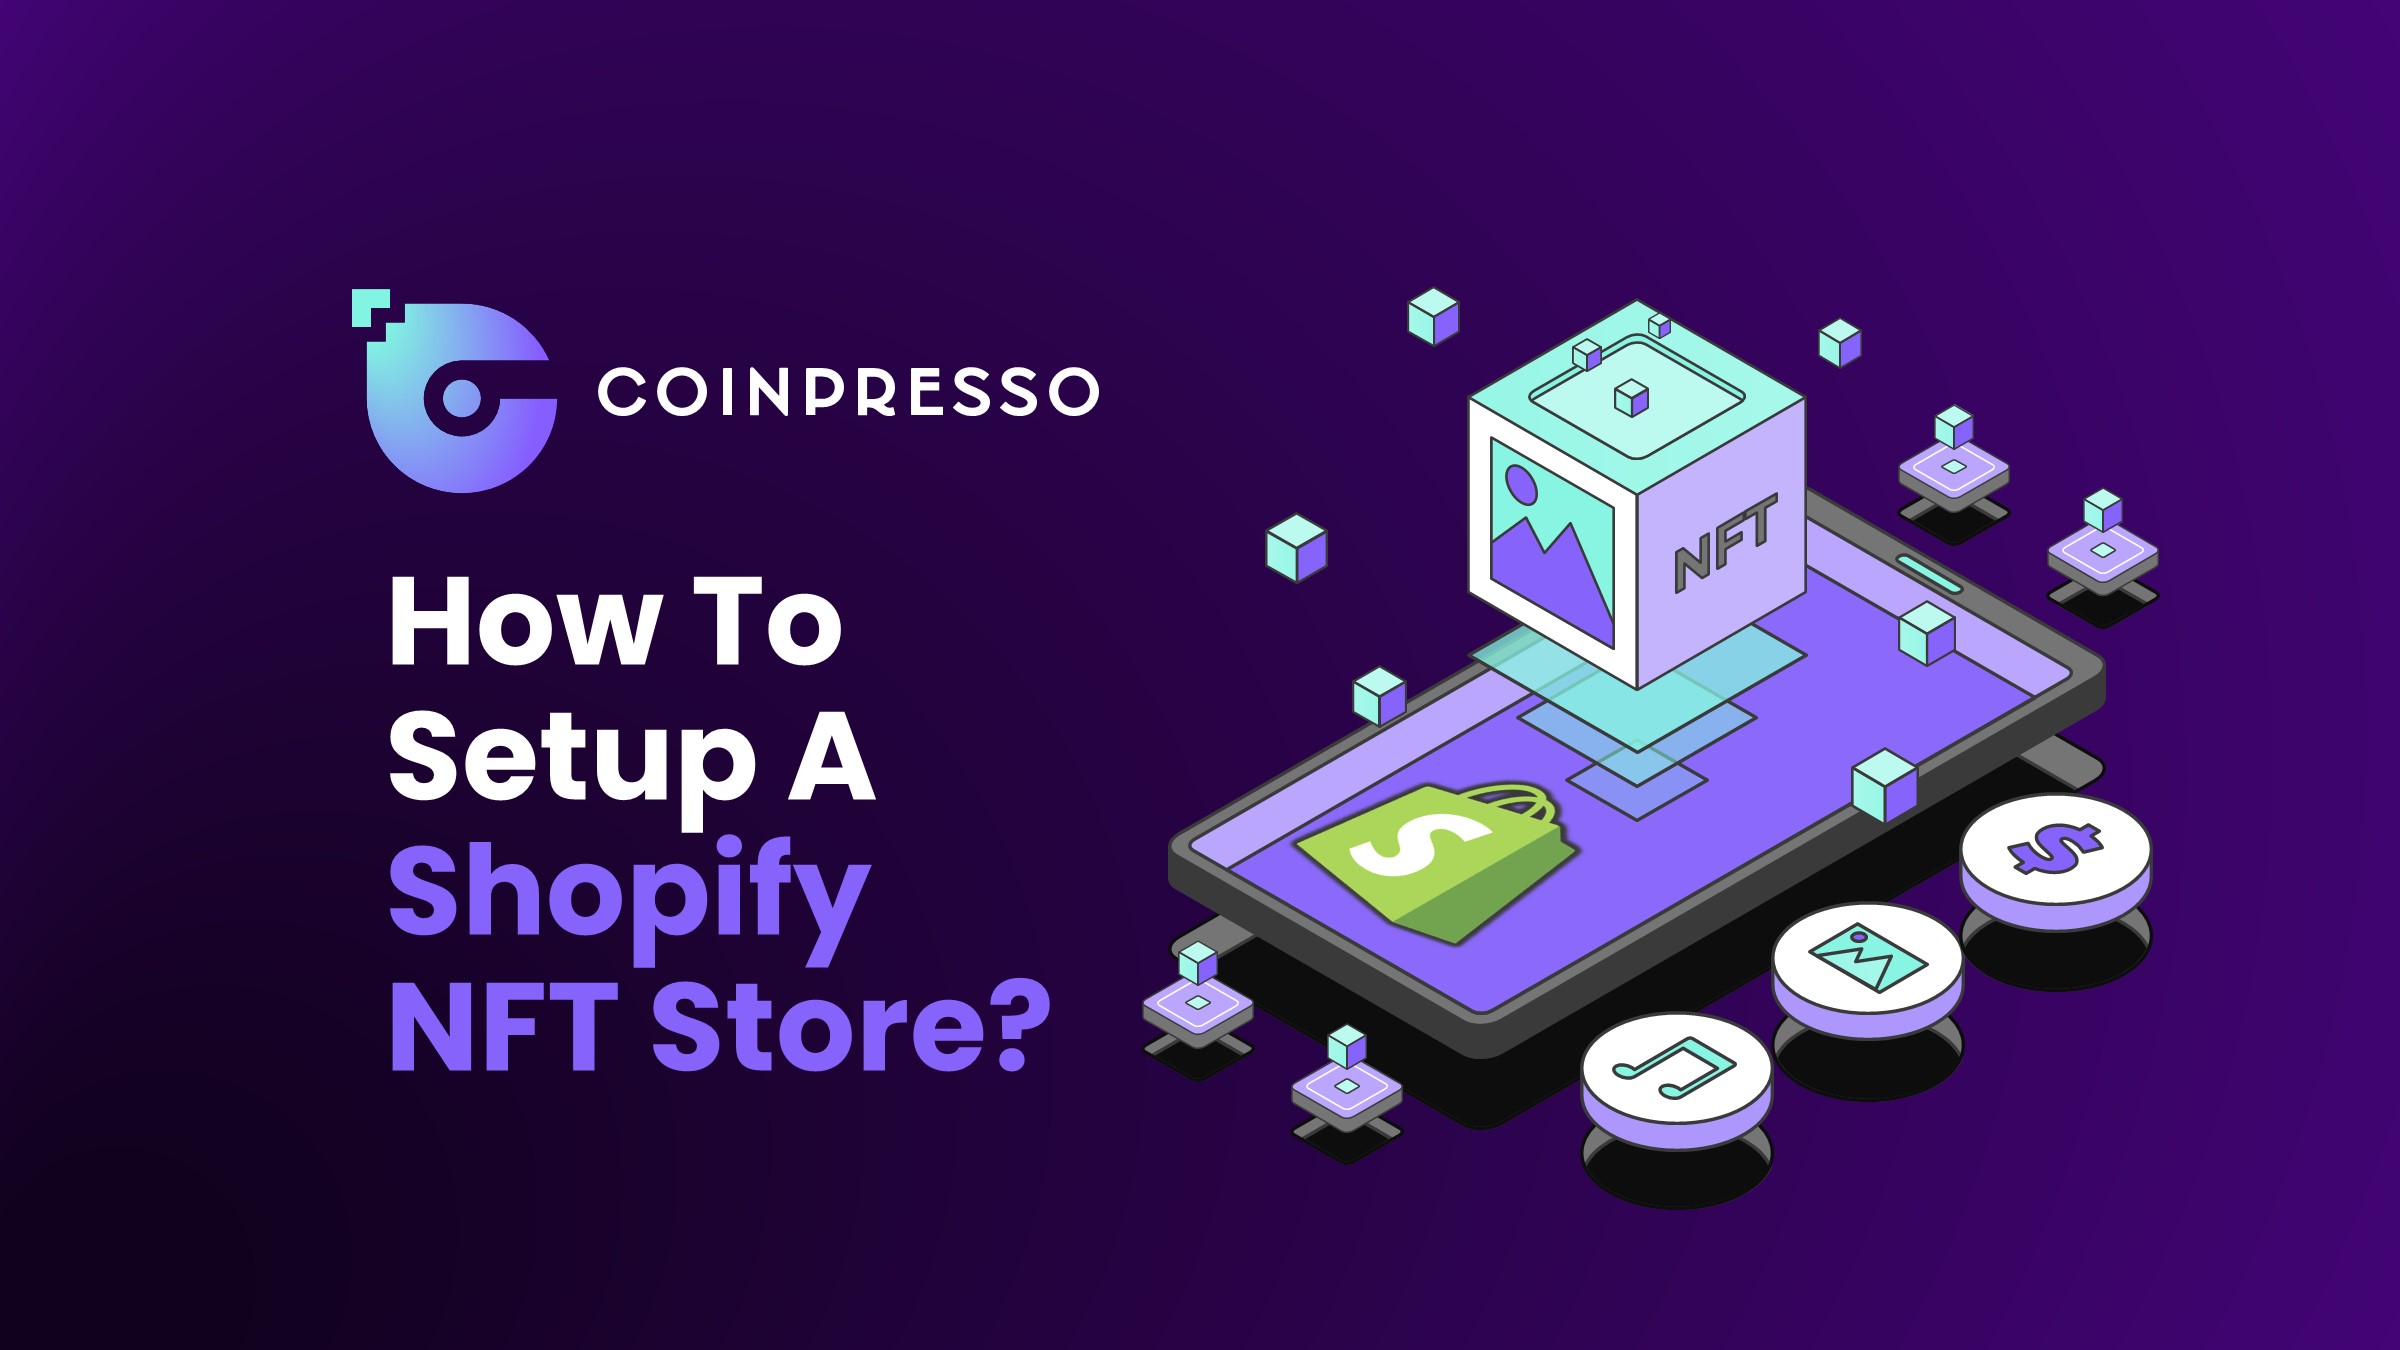 How To Setup A Shopify NFT Store